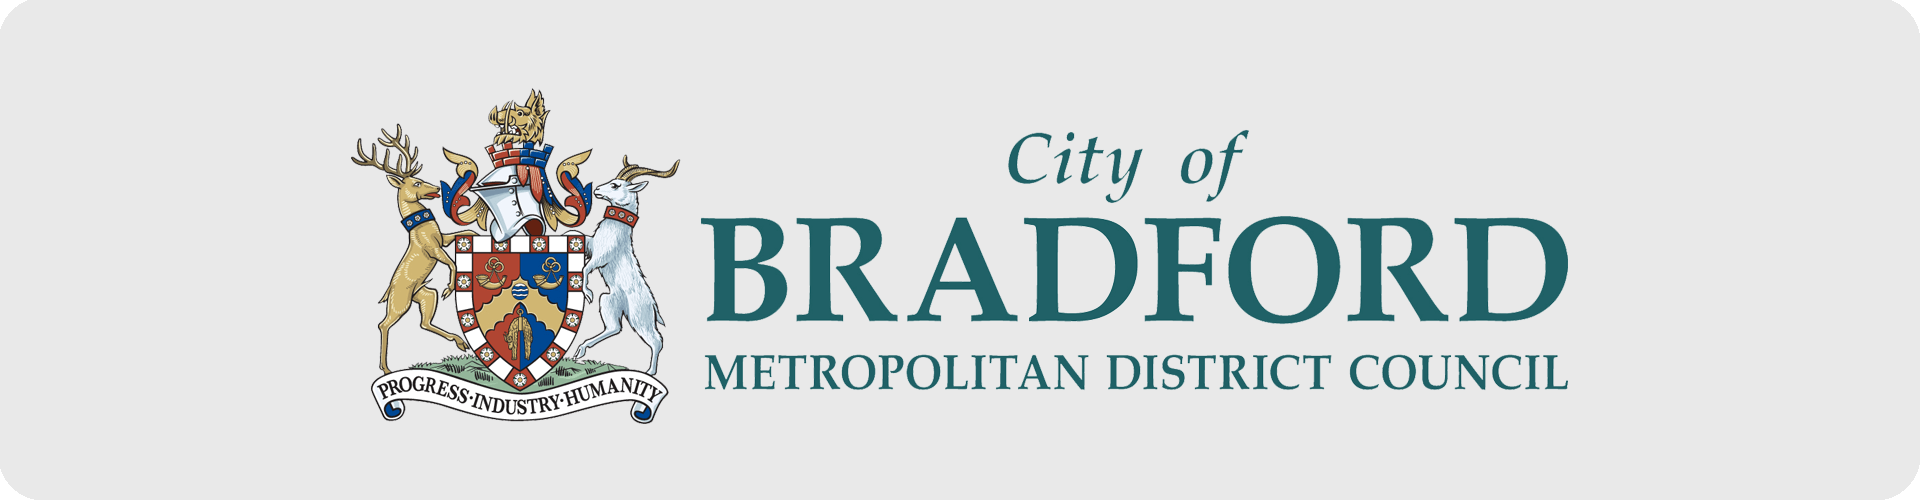 city of bradford metropolitan district council logo